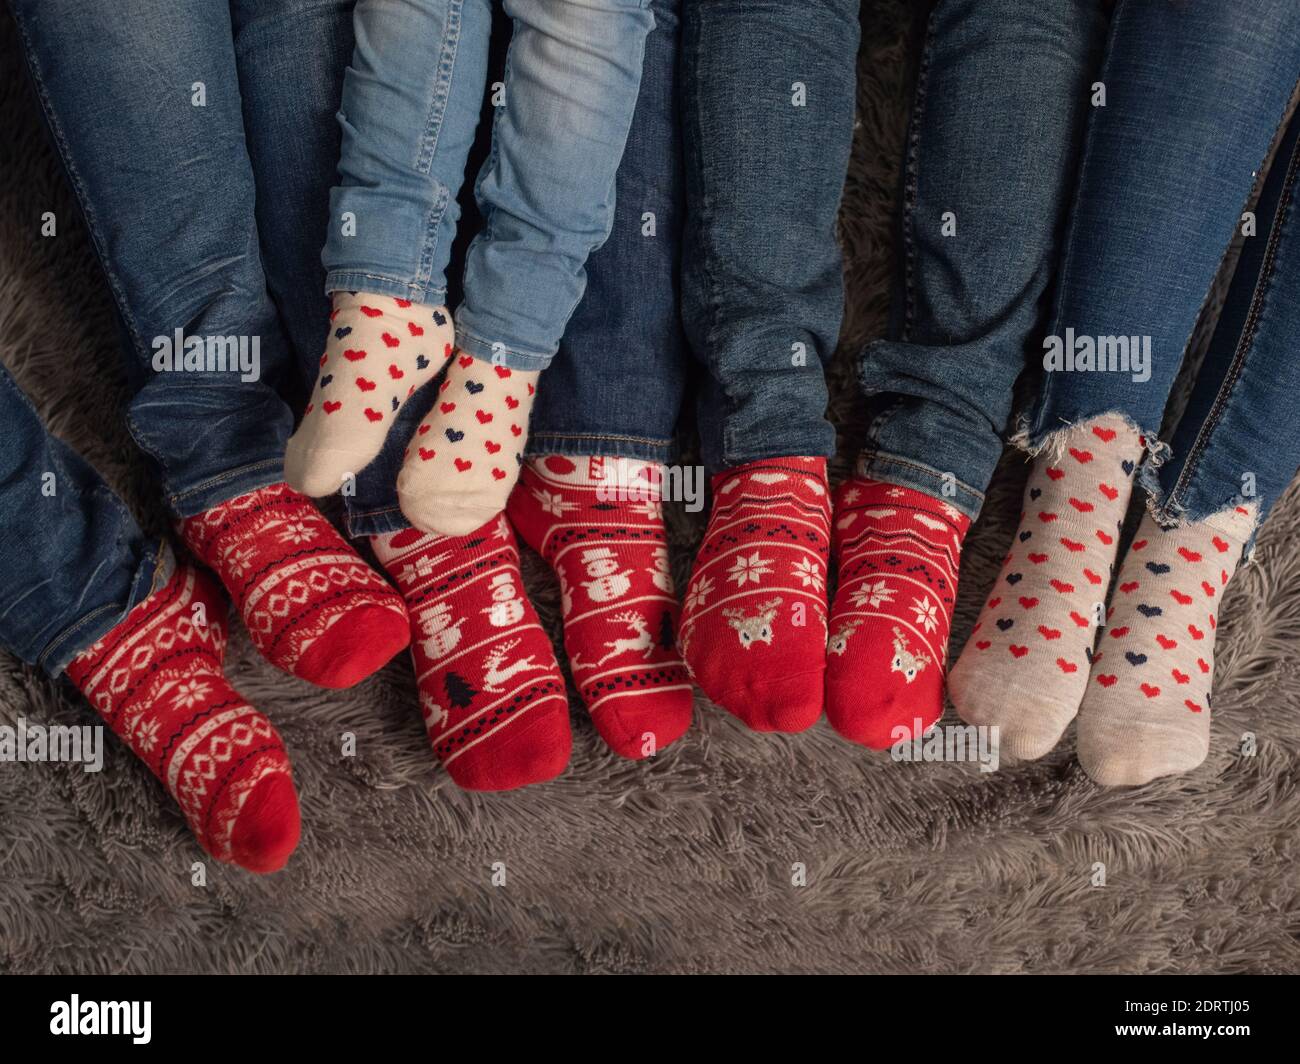 Christmas socks on the legs of the family. Stock Photo